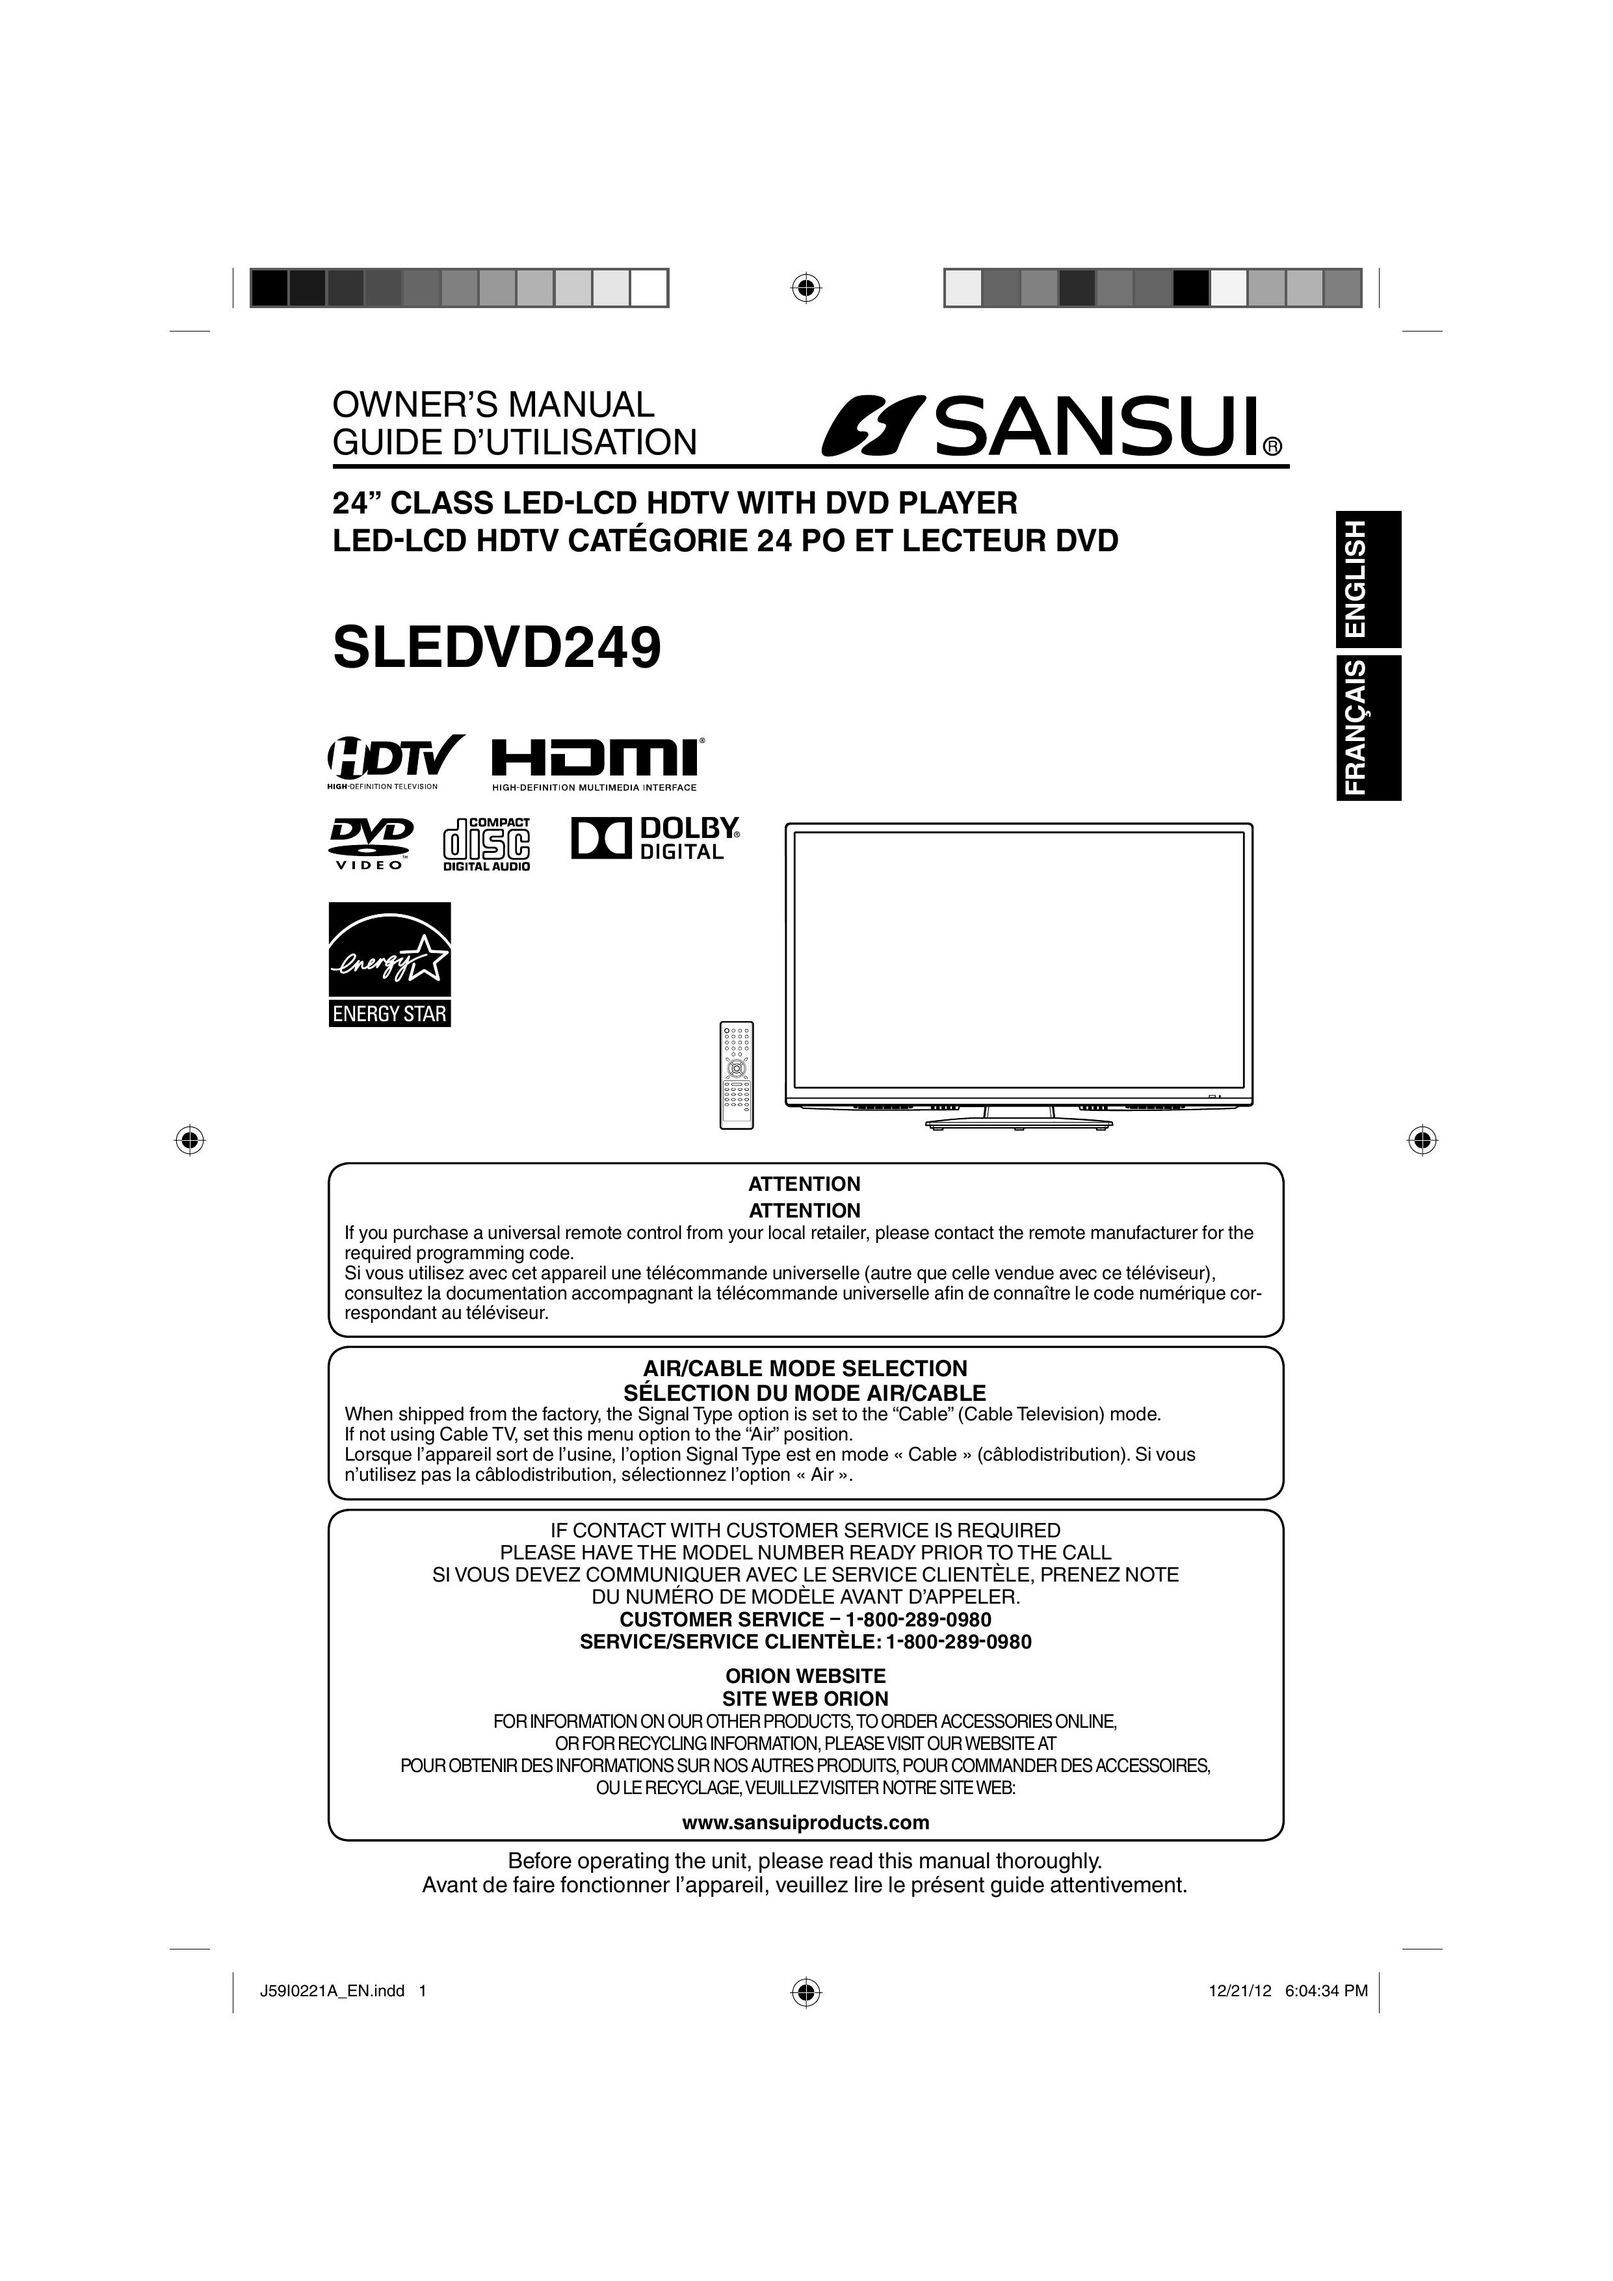 Sansui SLEDVD249 Flat Panel Television User Manual